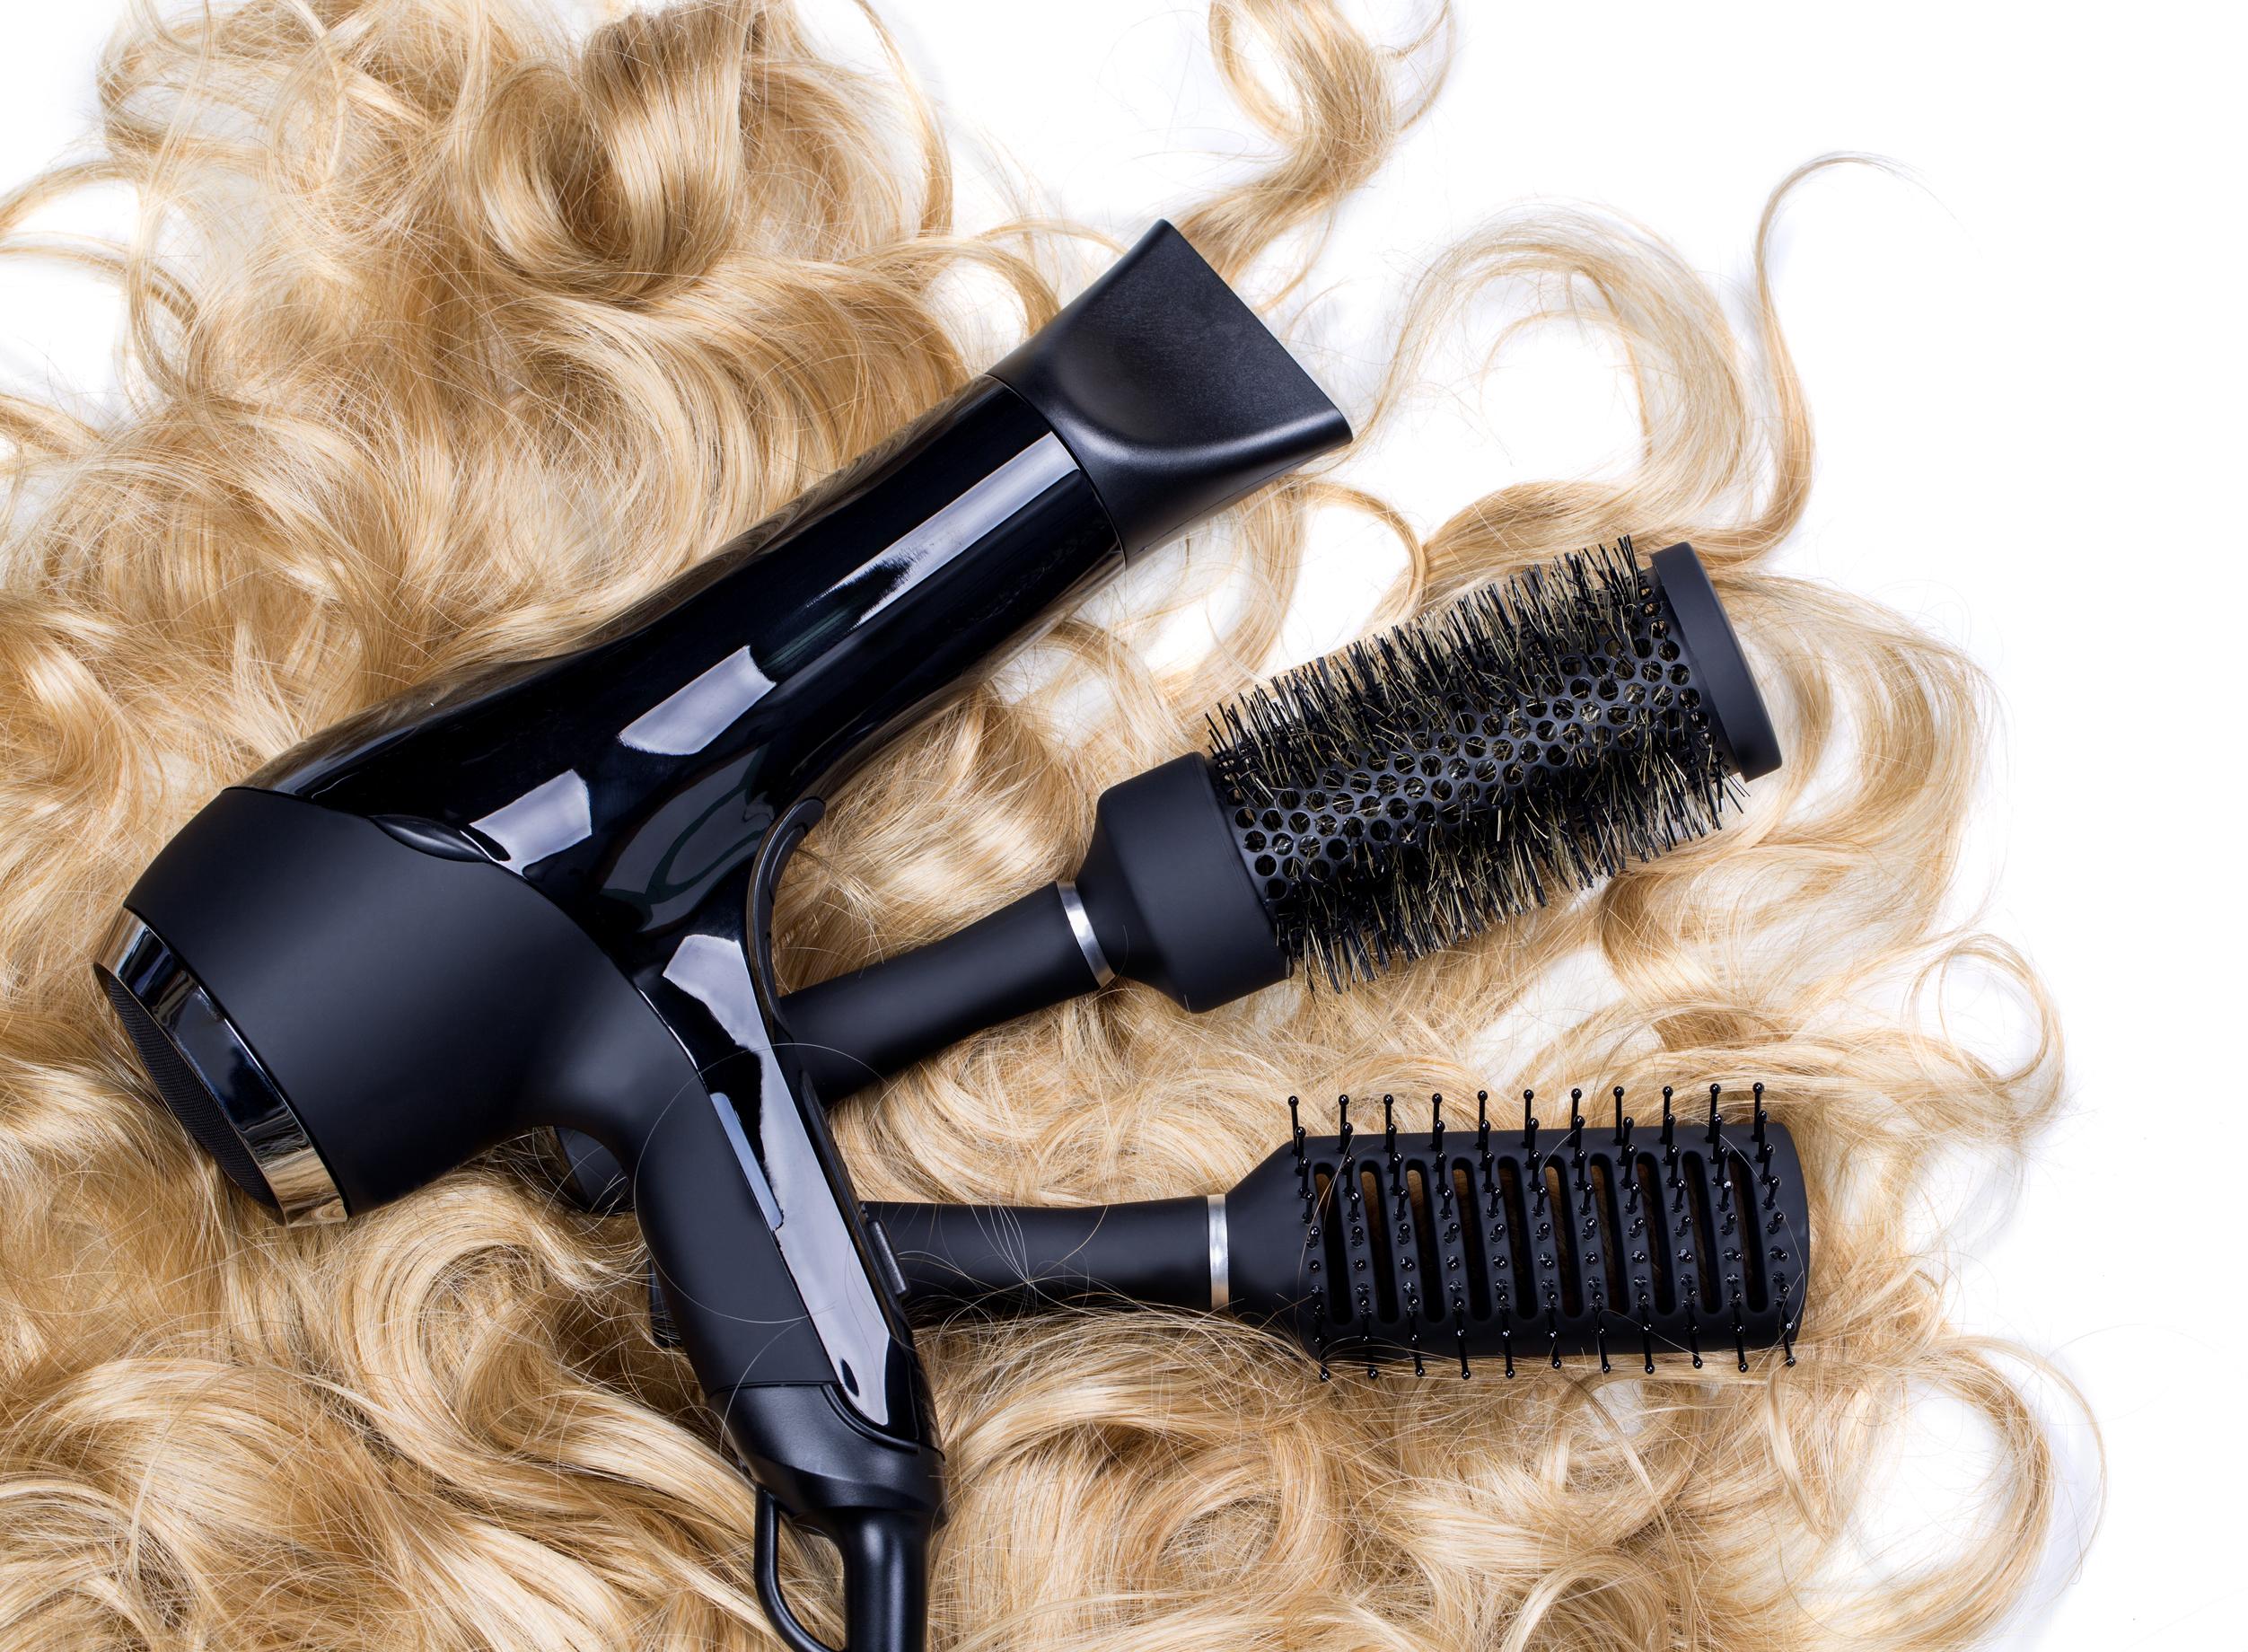 long hair, hair dryer, and hair brushes